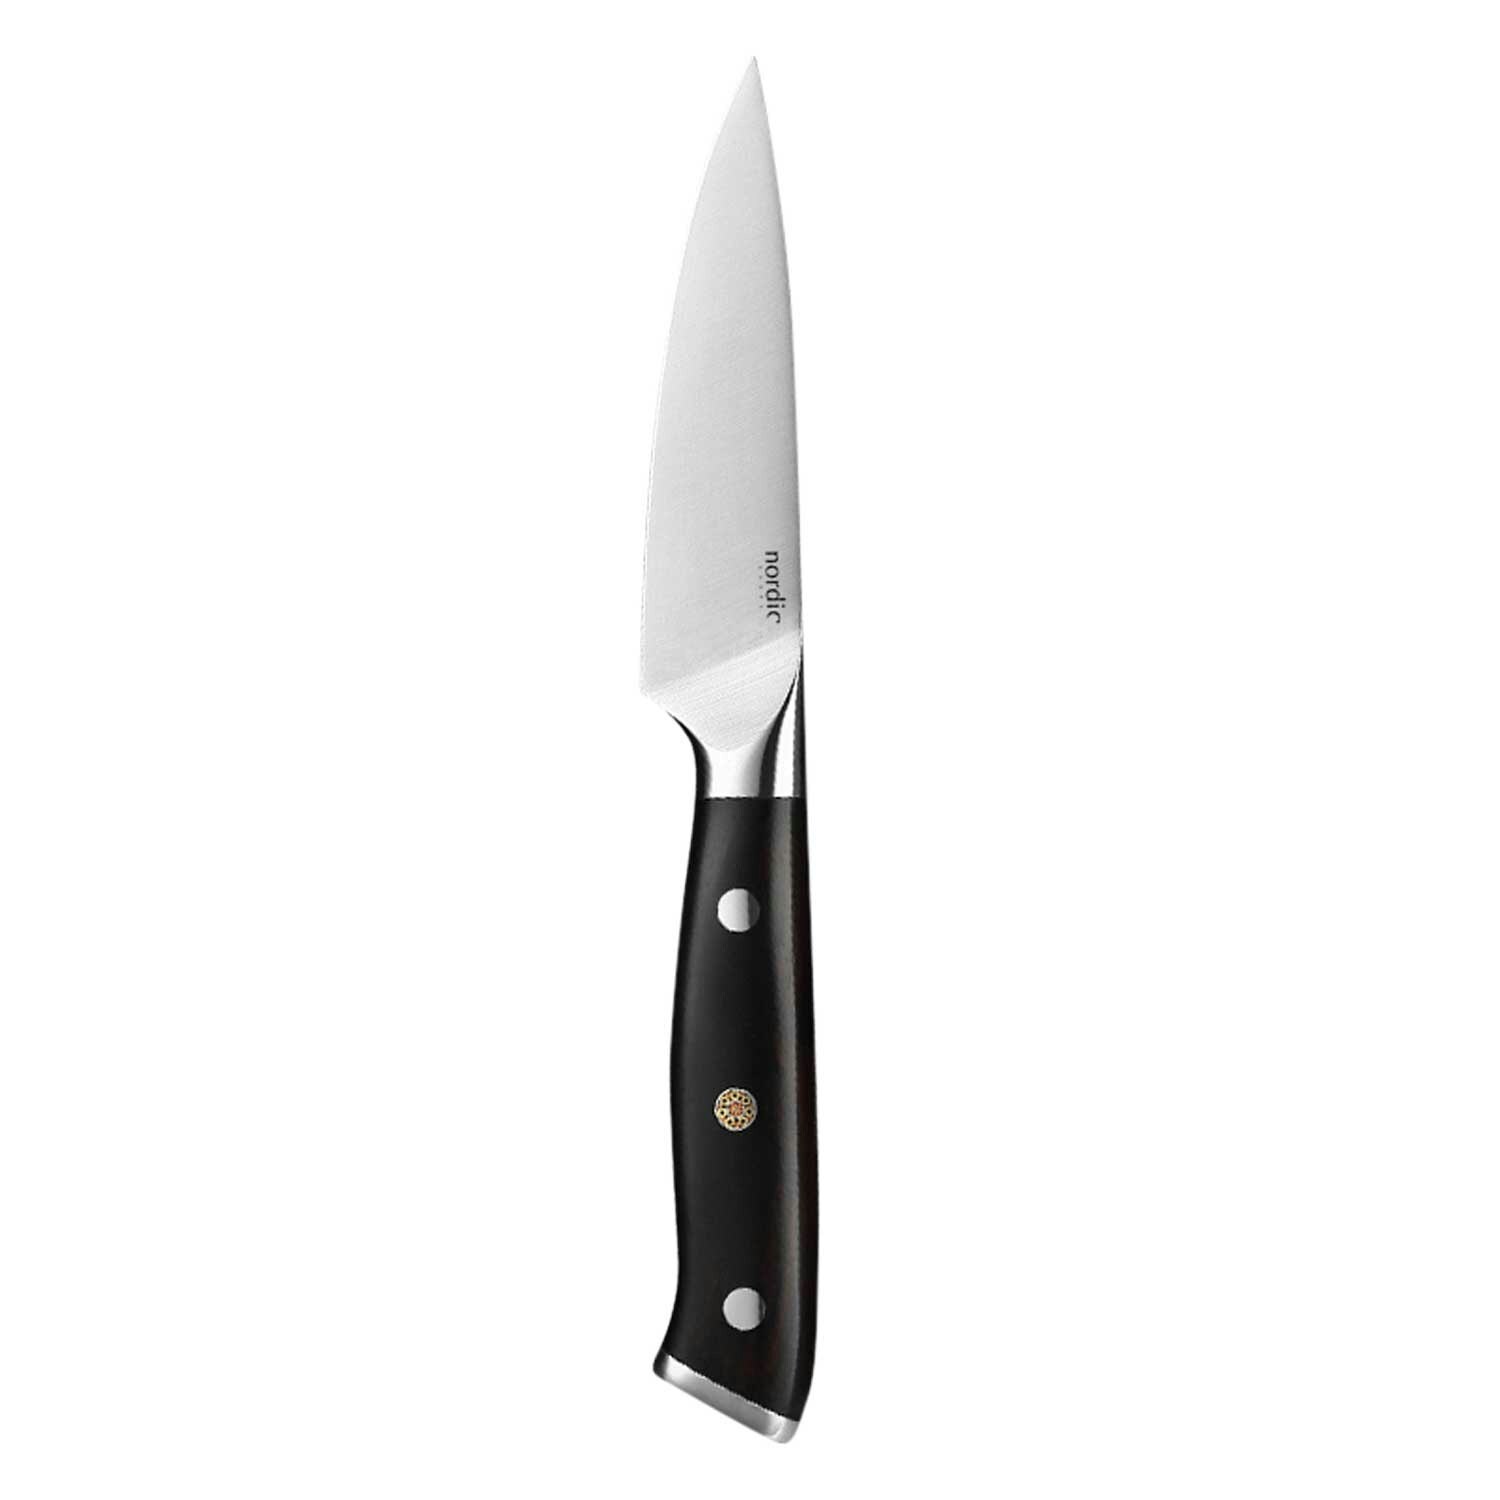 https://royaldesign.com/image/2/nordic-chef-nordic-paring-knife-20-cm-0